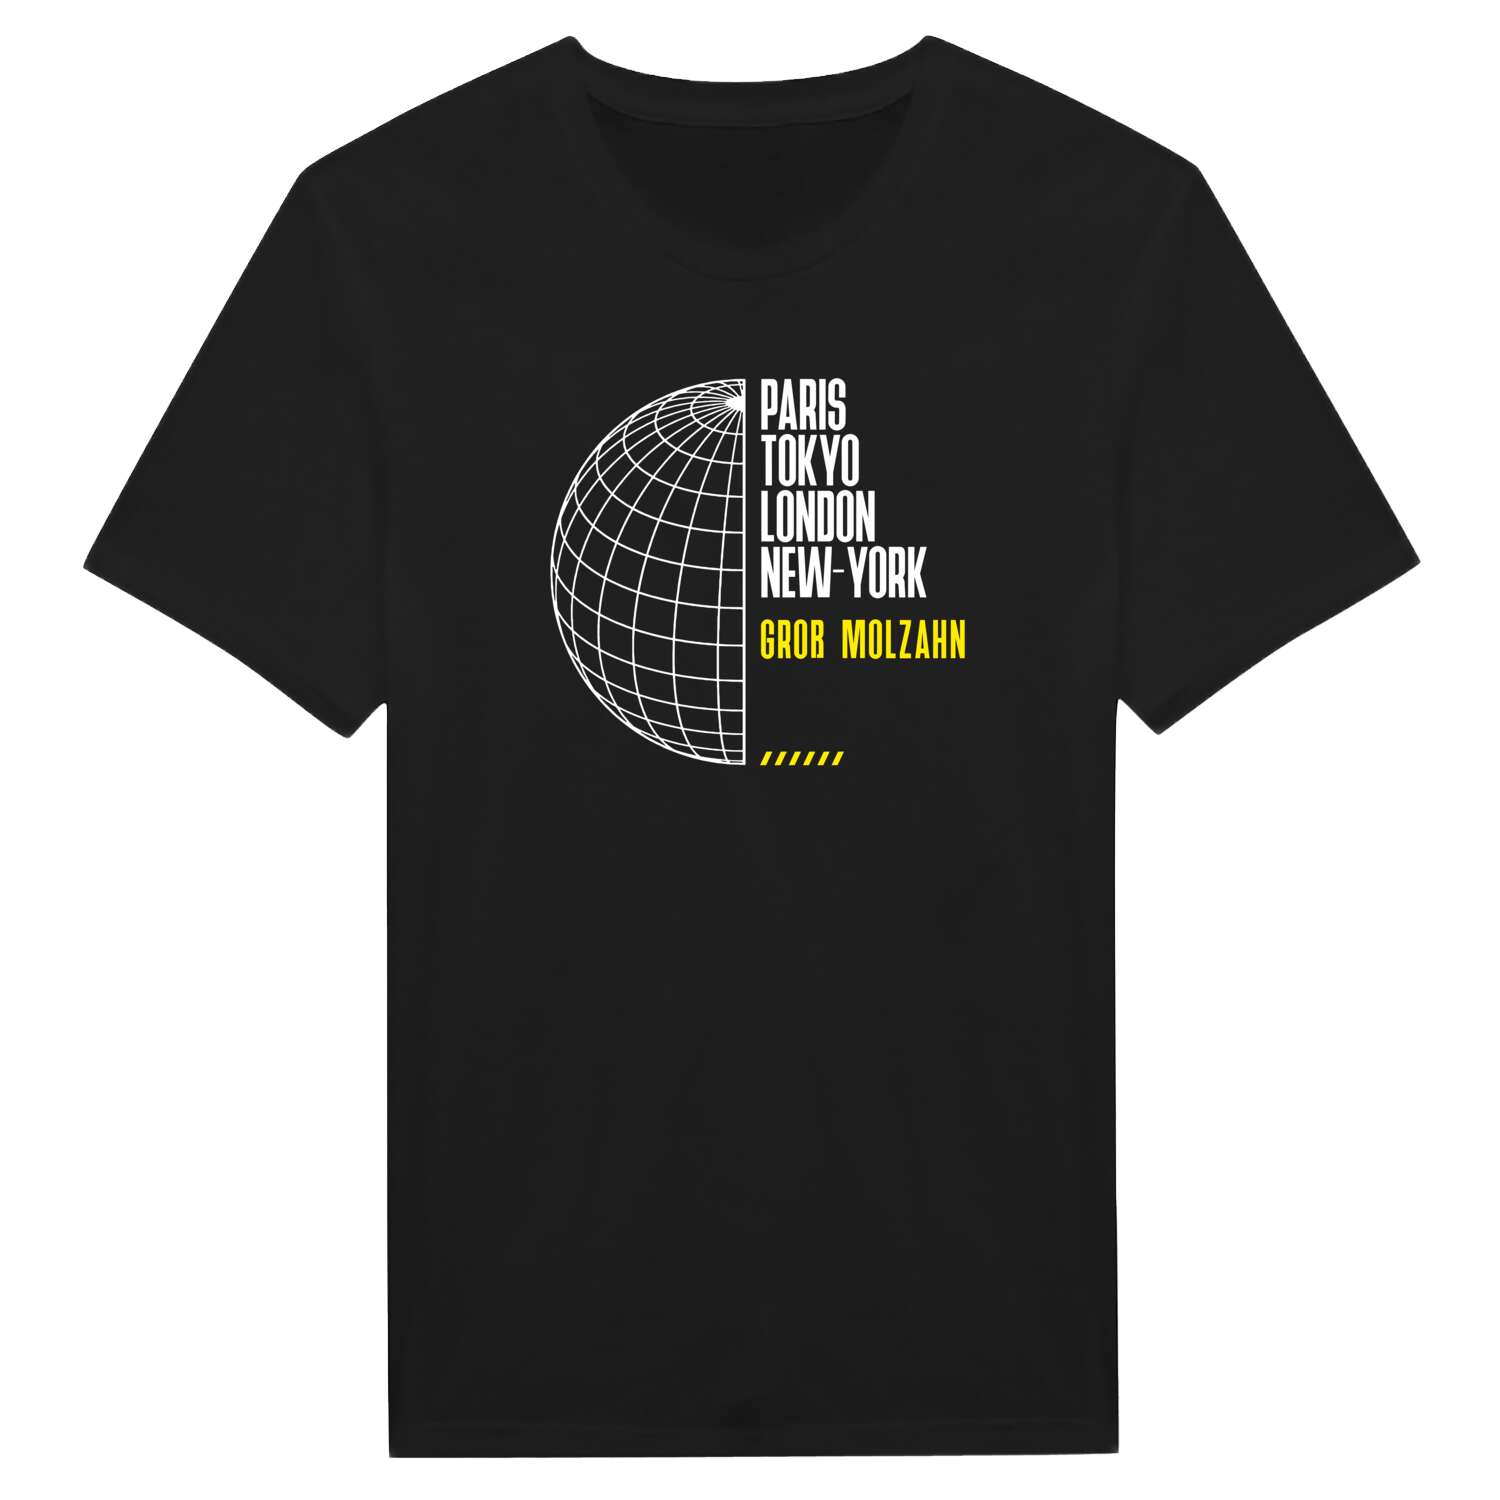 Groß Molzahn T-Shirt »Paris Tokyo London«